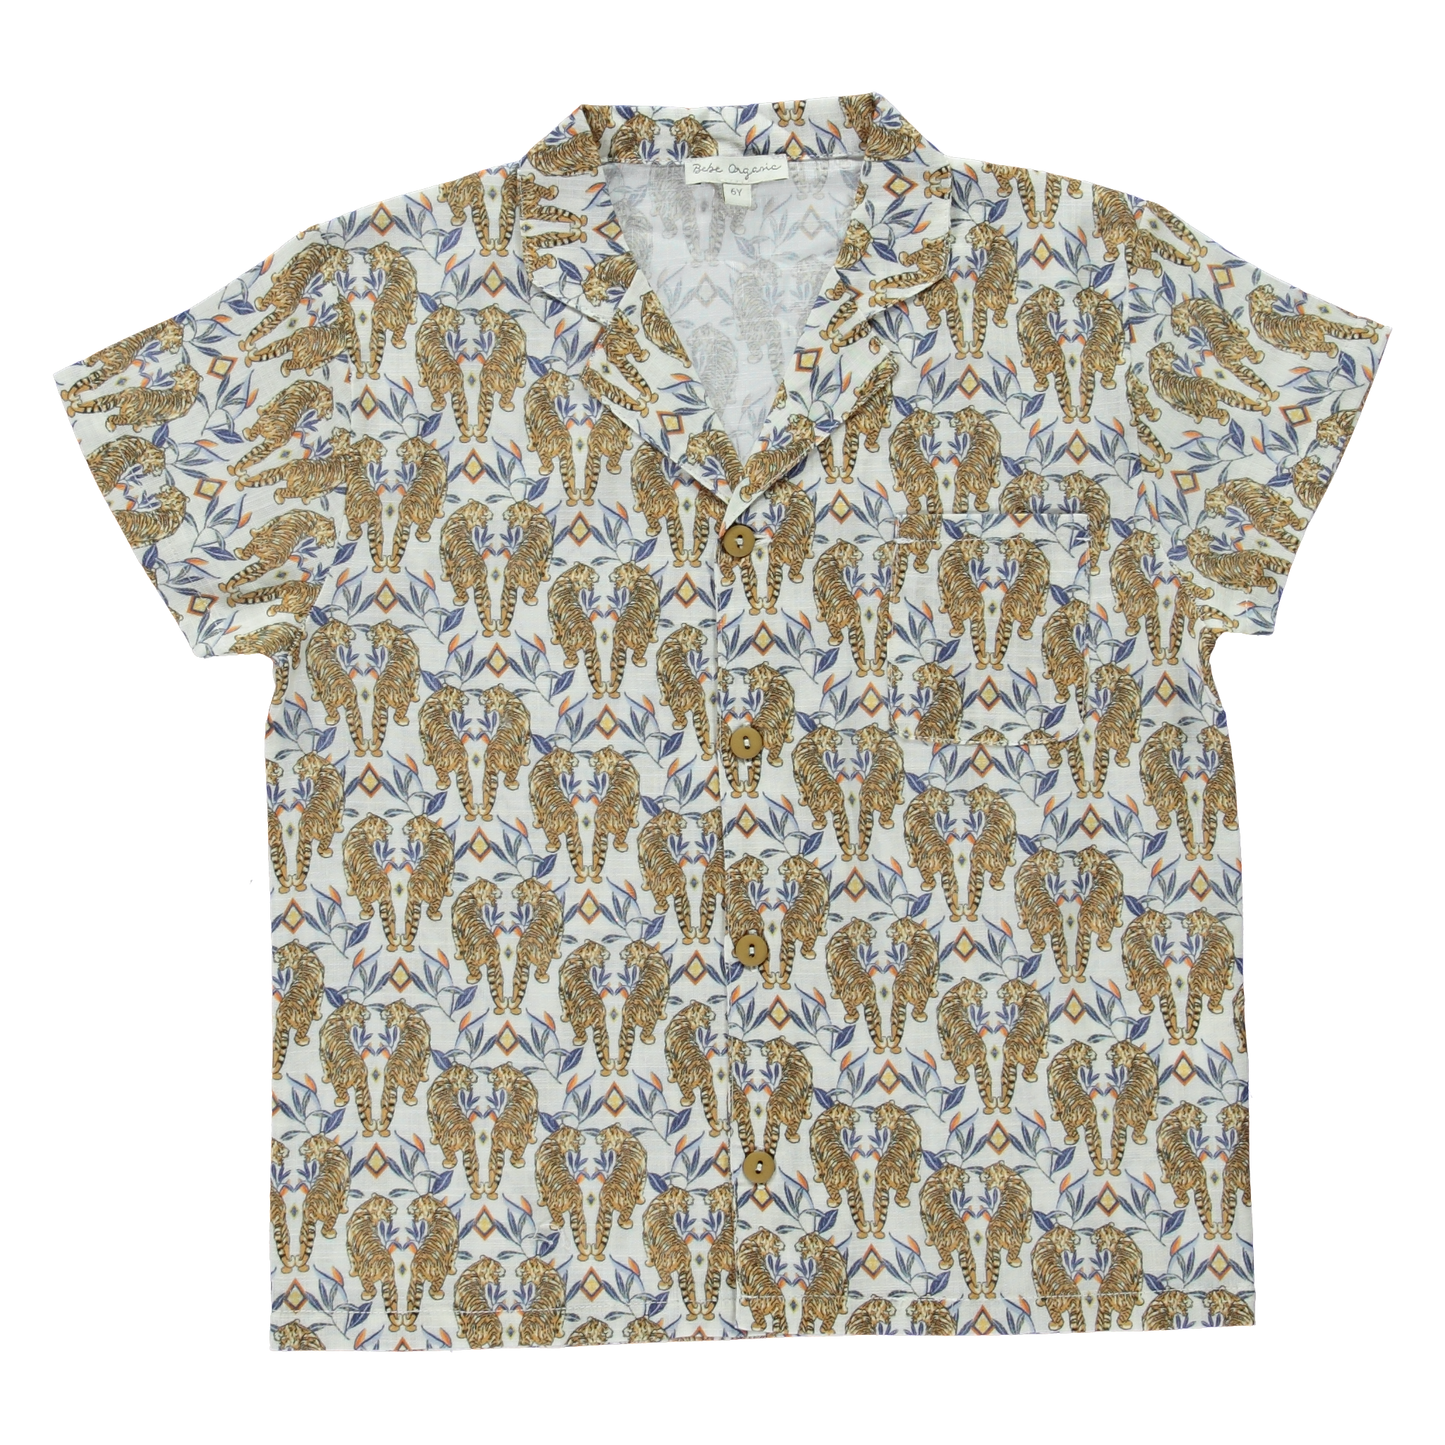 Wild Print Tigers Cotton Shirt